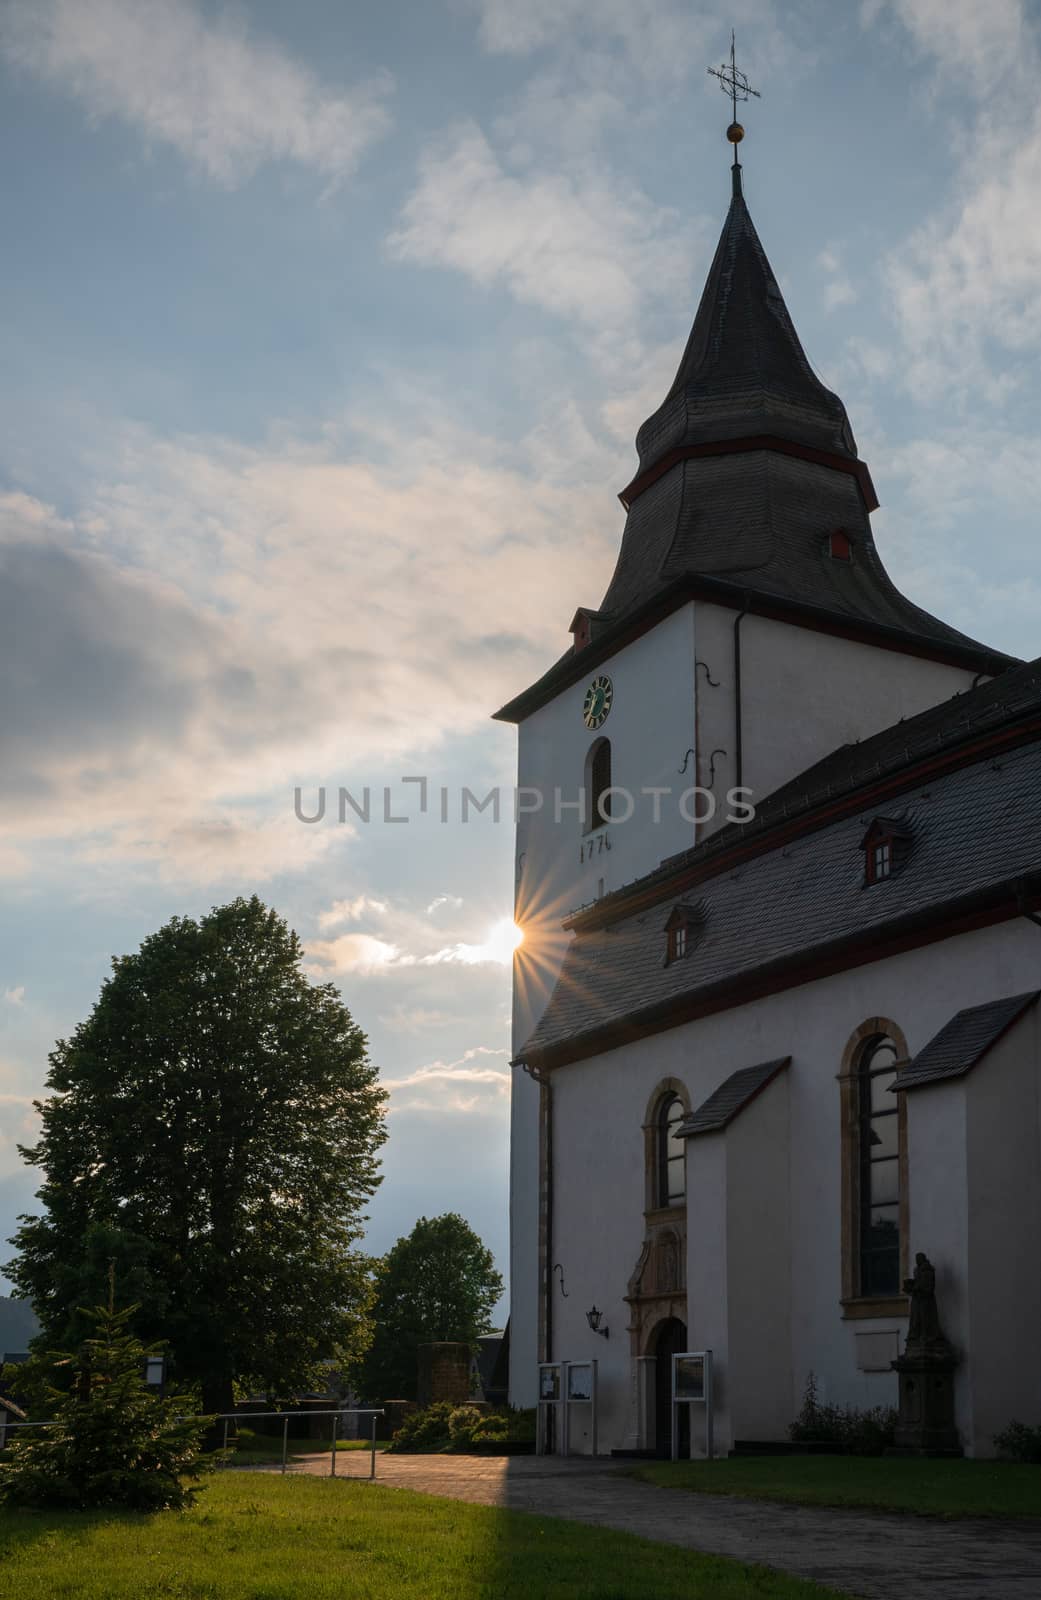 Parish church, Winterberg, Germany by alfotokunst